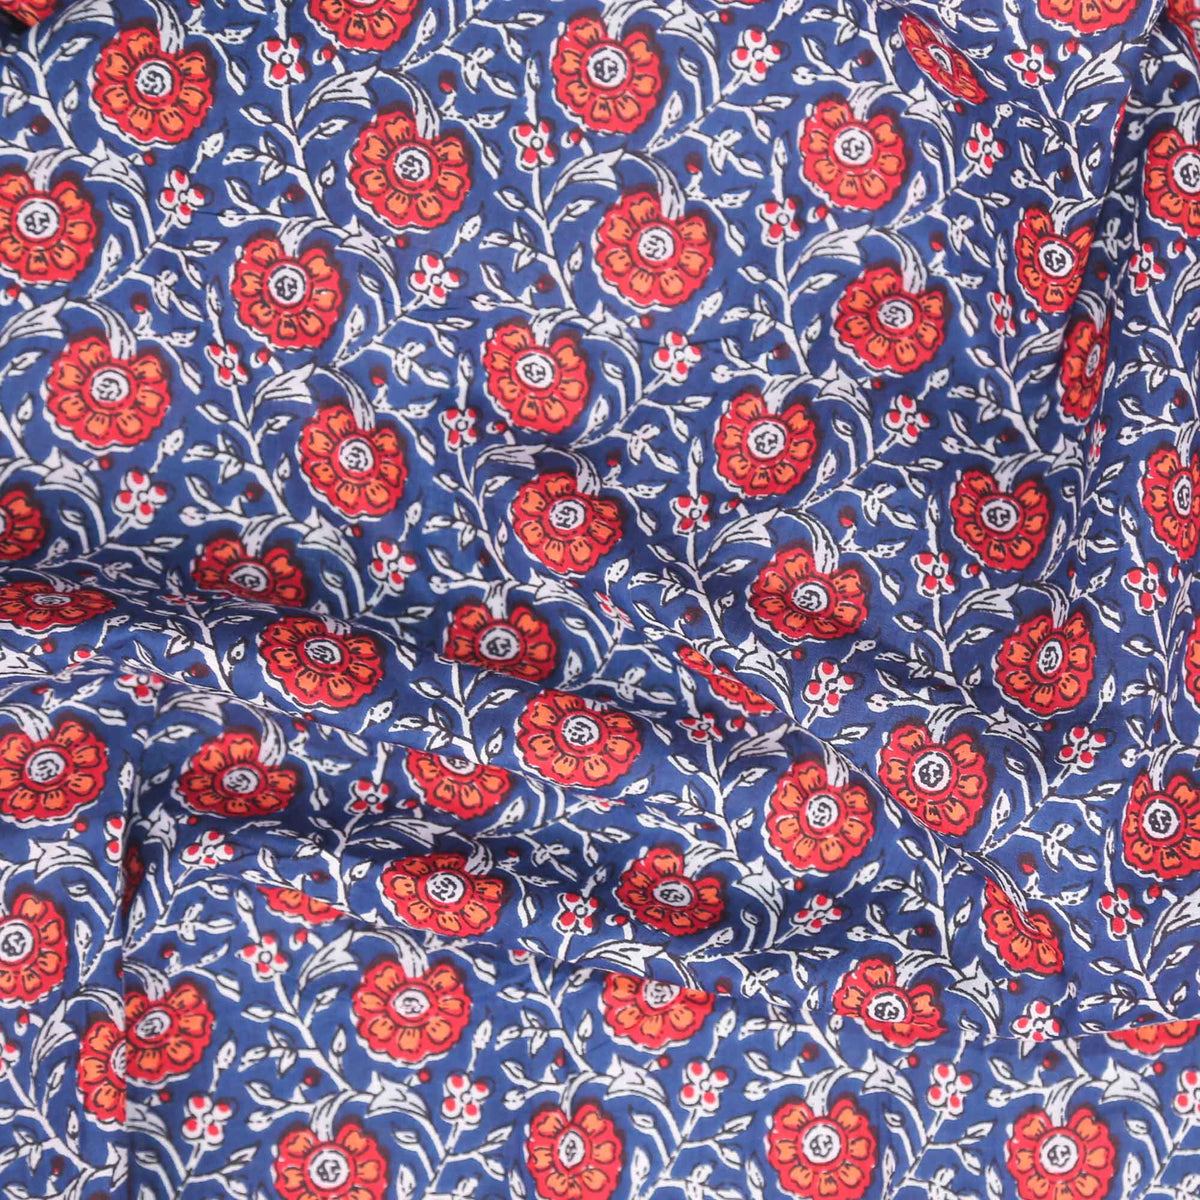 Block Printed 100% Cotton Women Dress Fabric Red Wedgwood Flowers Design 439